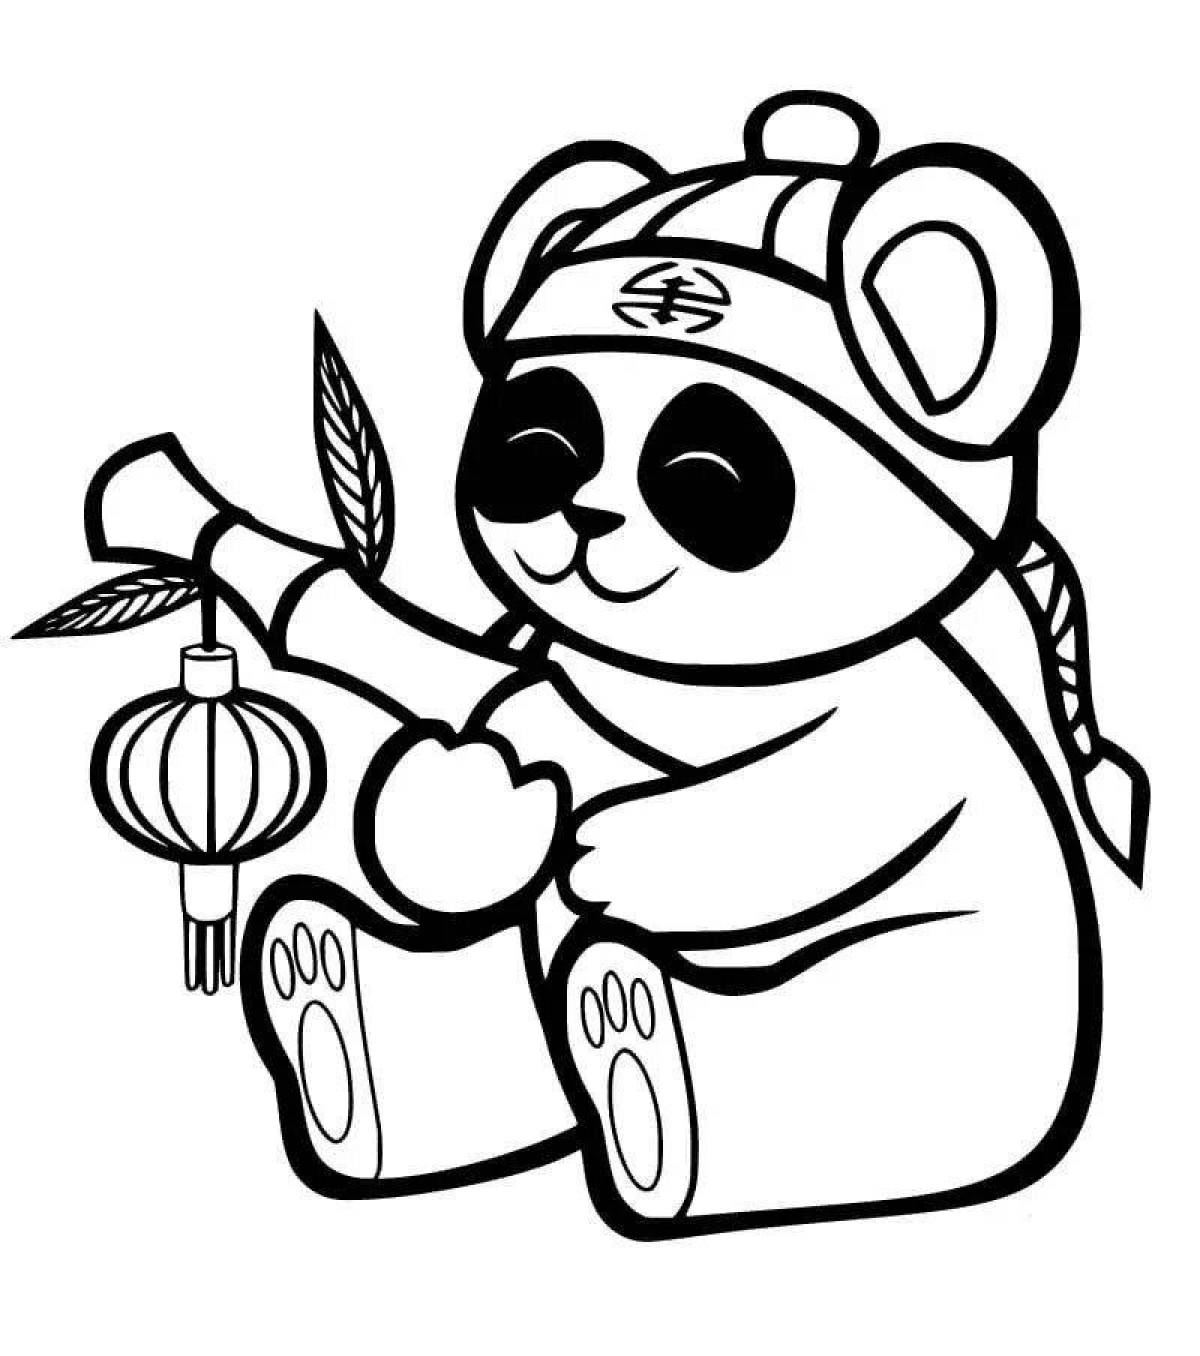 Huggable cute panda coloring page